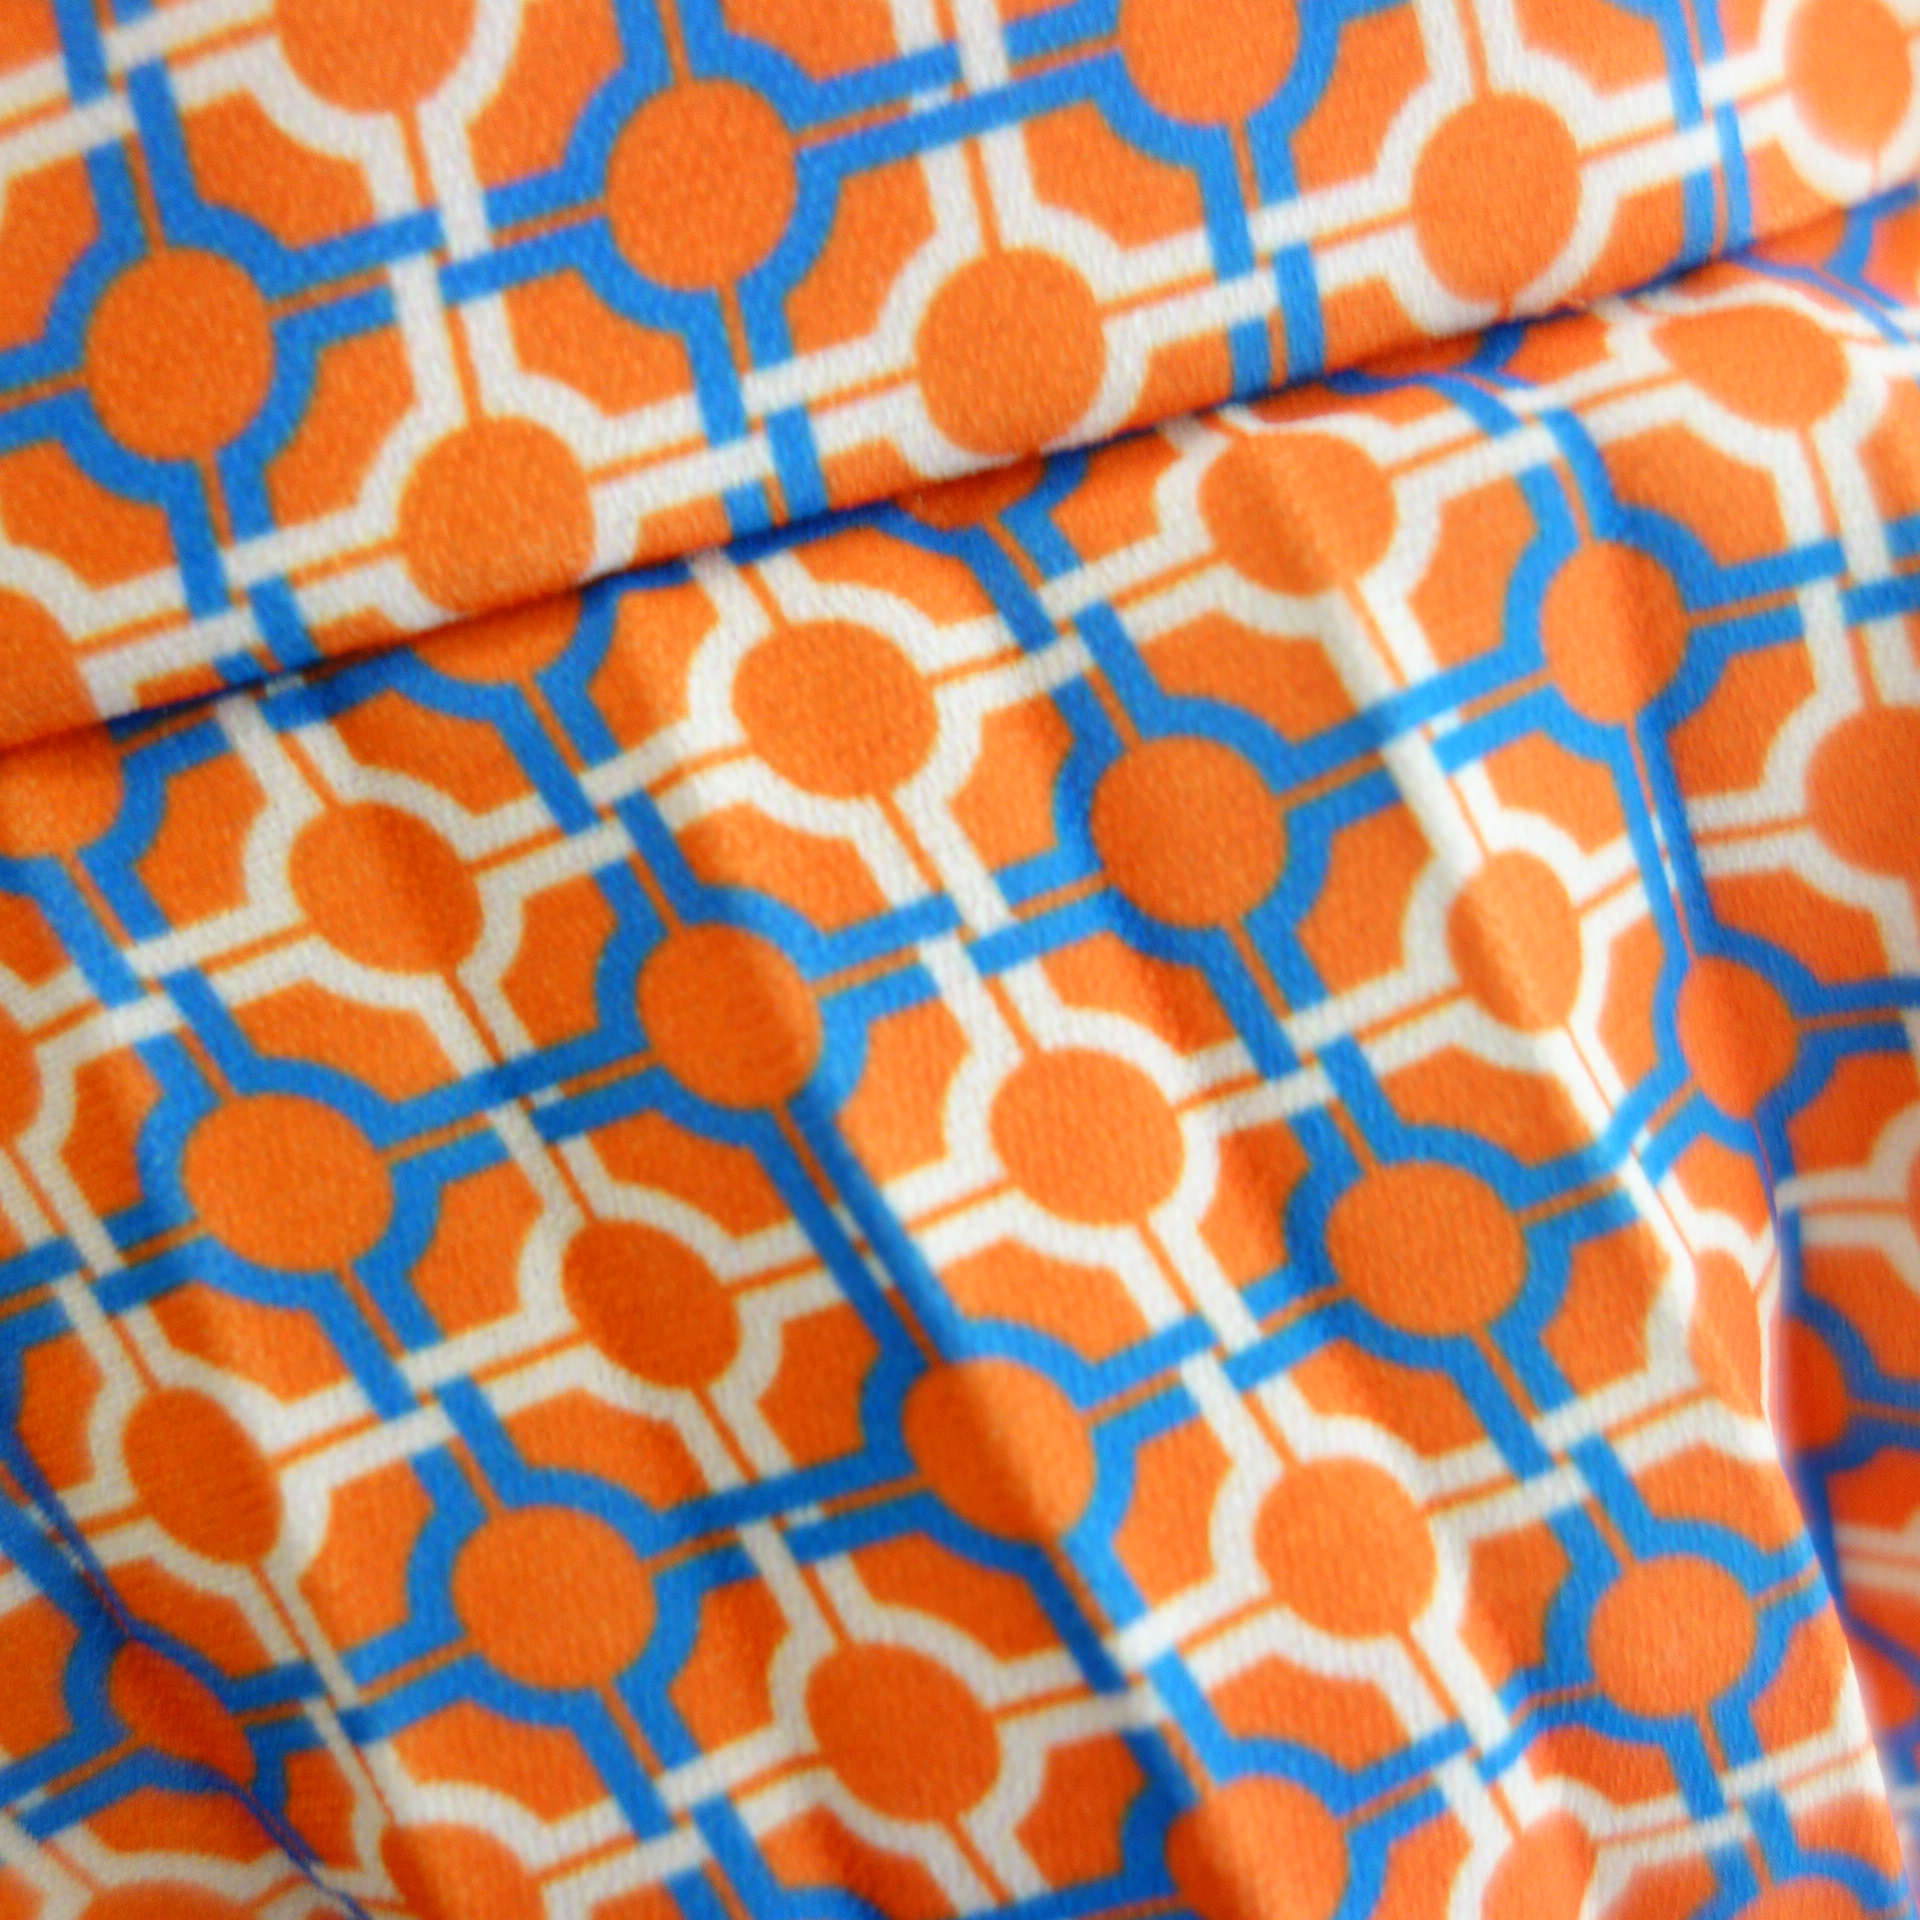 SEIDENSTICKER Faltenrock Damen Midi Blau Orange Weiß Retro Muster 